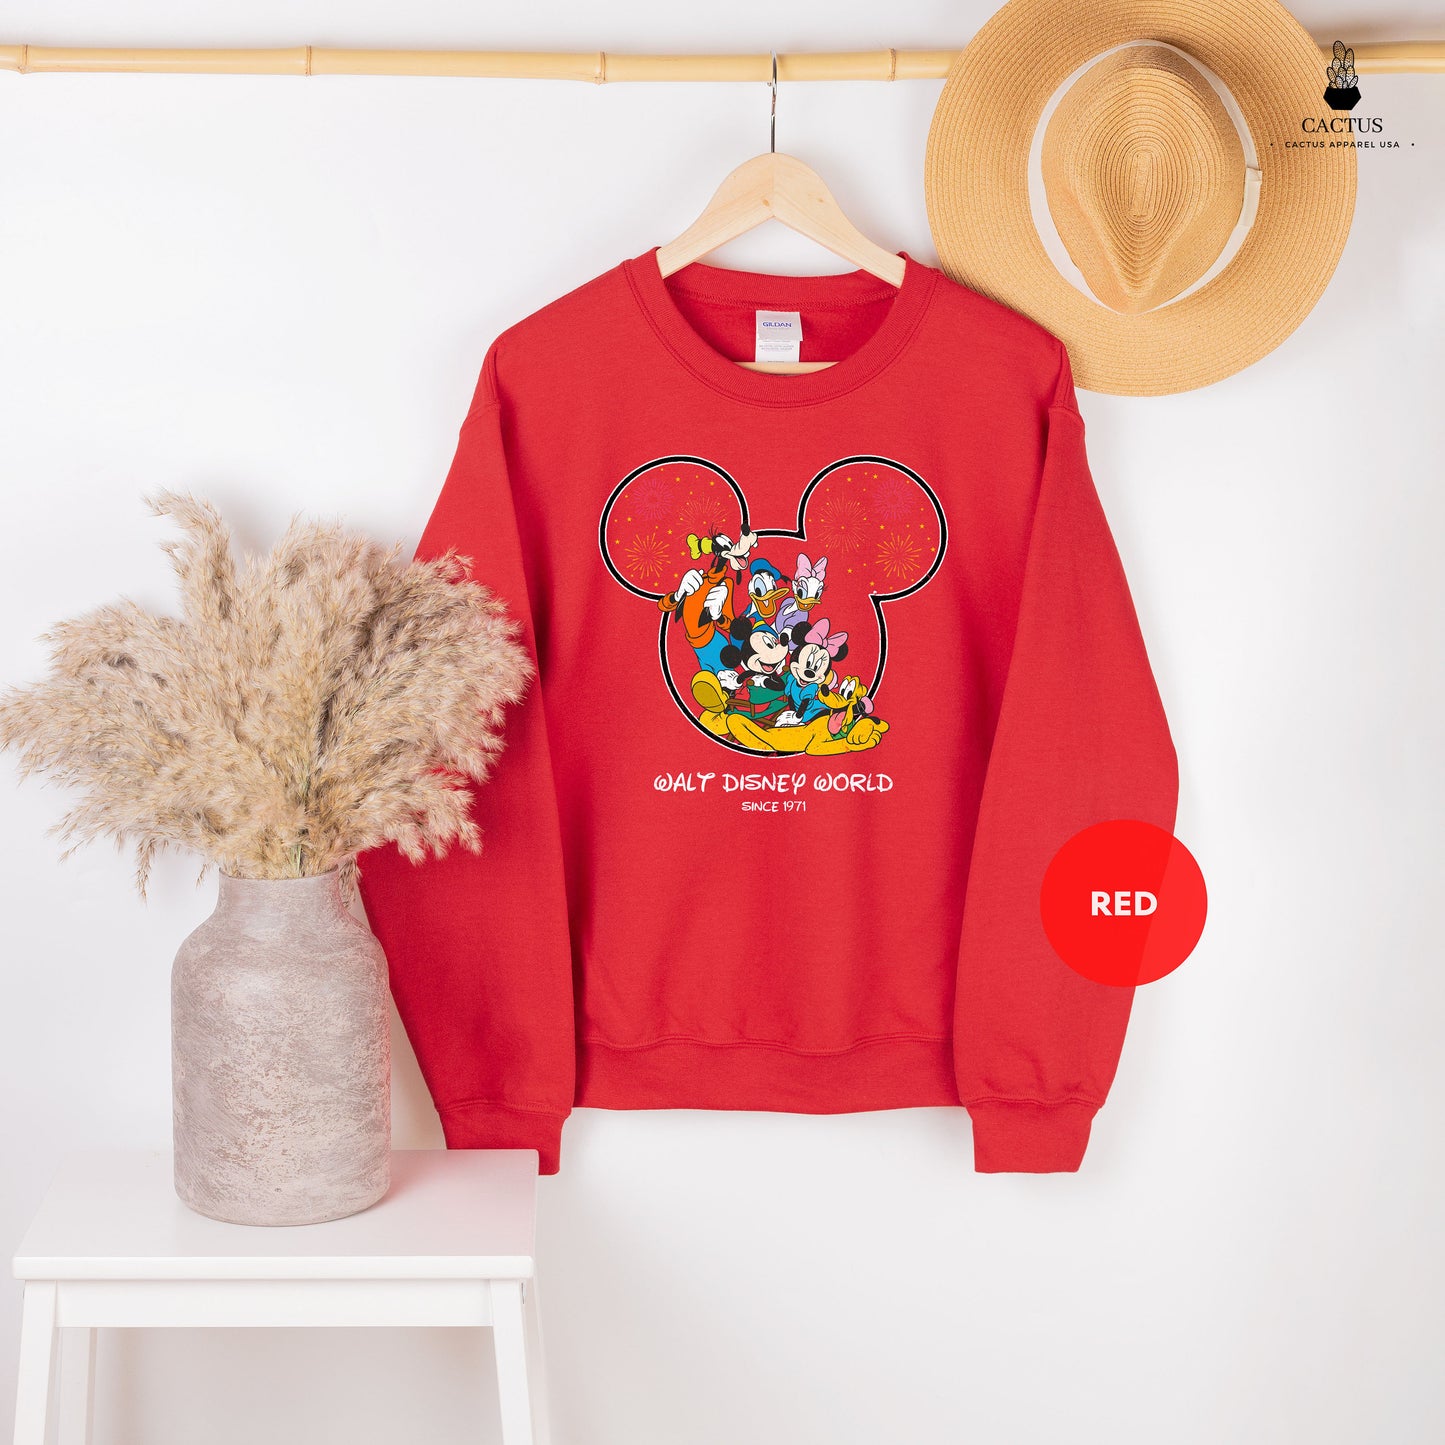 Walt Disney World Since 1971 Sweatshirt, Disneyworld Est 1971 Sweat, Mickey and Friend Shirt, Disney Family Shirt, Minnie Donald Pluto Shirt